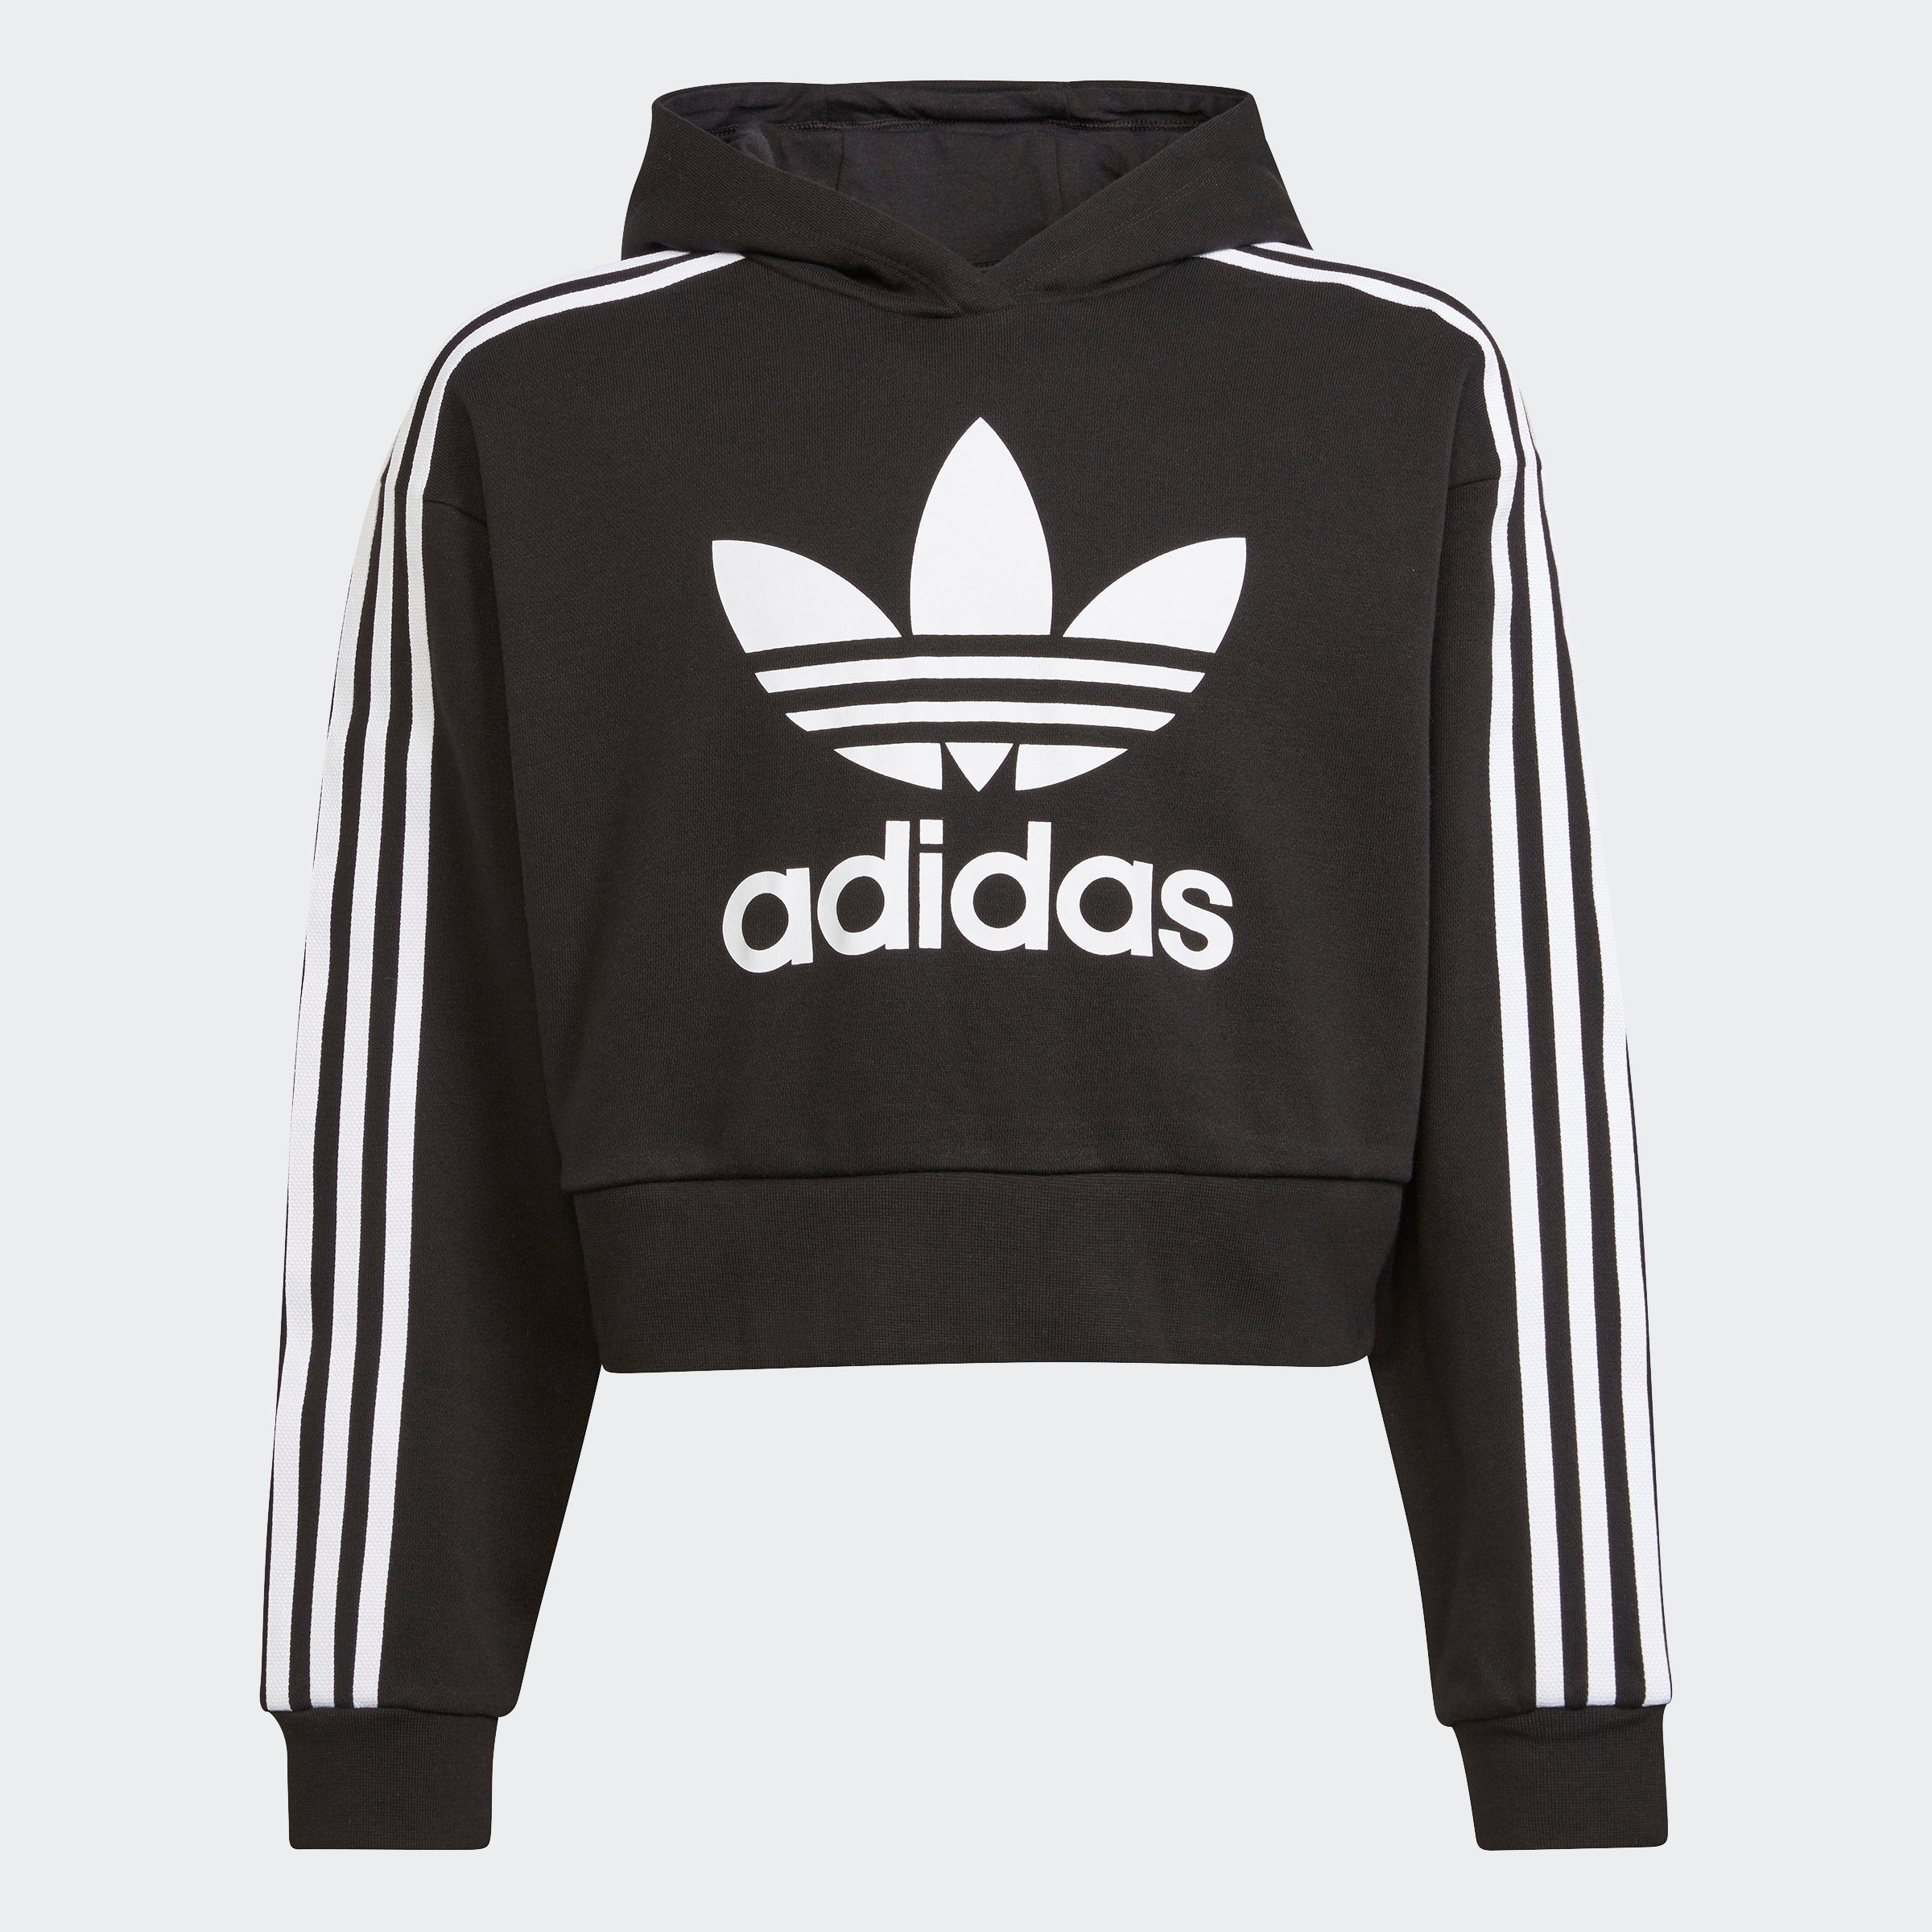 CROPPED Black Sweatshirt adidas / ADICOLOR White HOODIE Originals